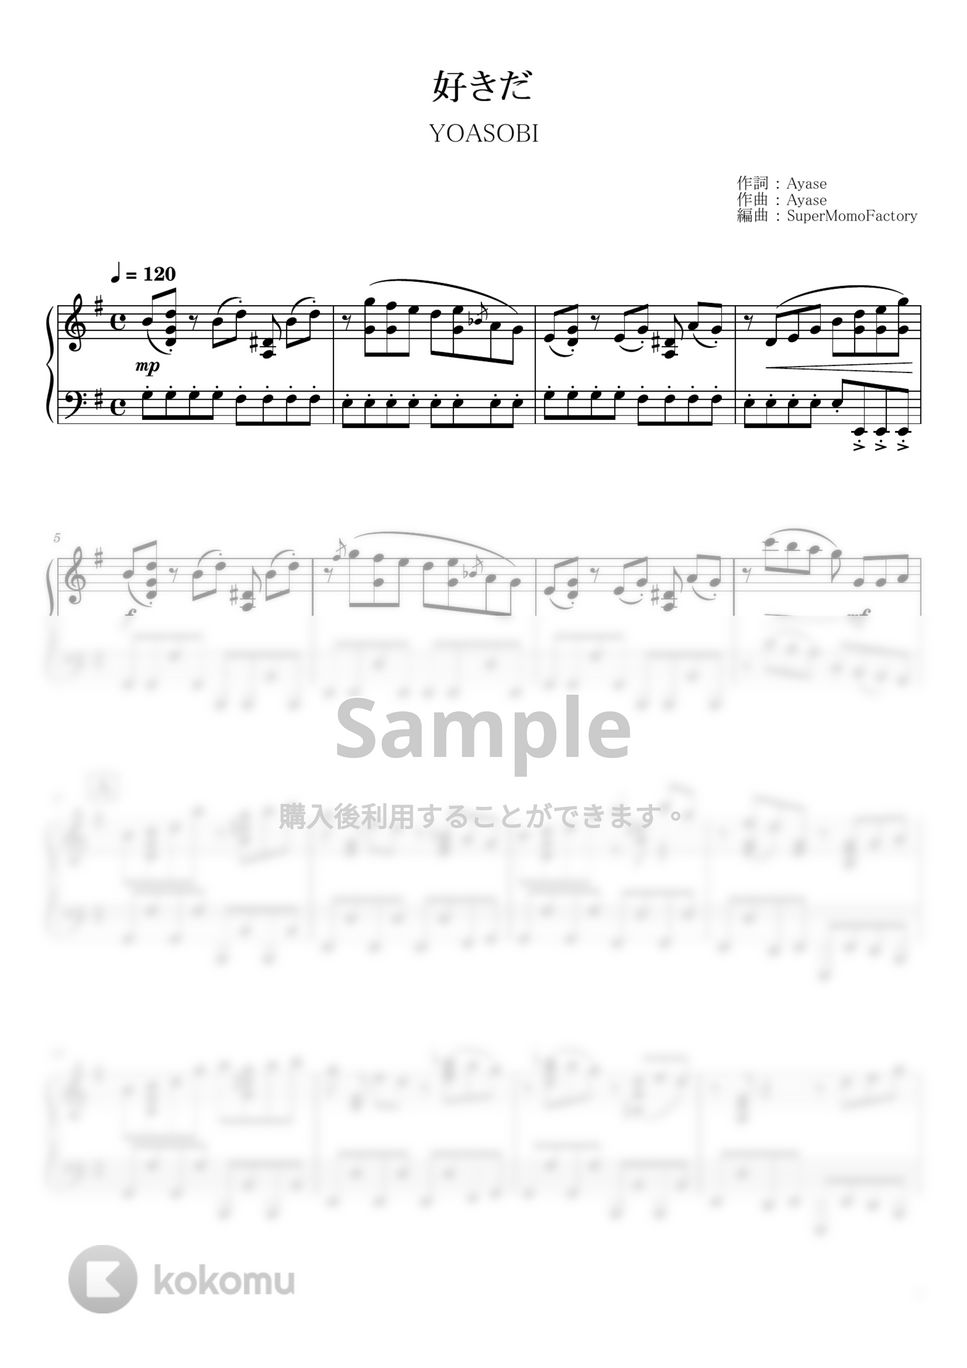 YOASOBI - 好きだ (ピアノソロ / 中級～上級) by SuperMomoFactory